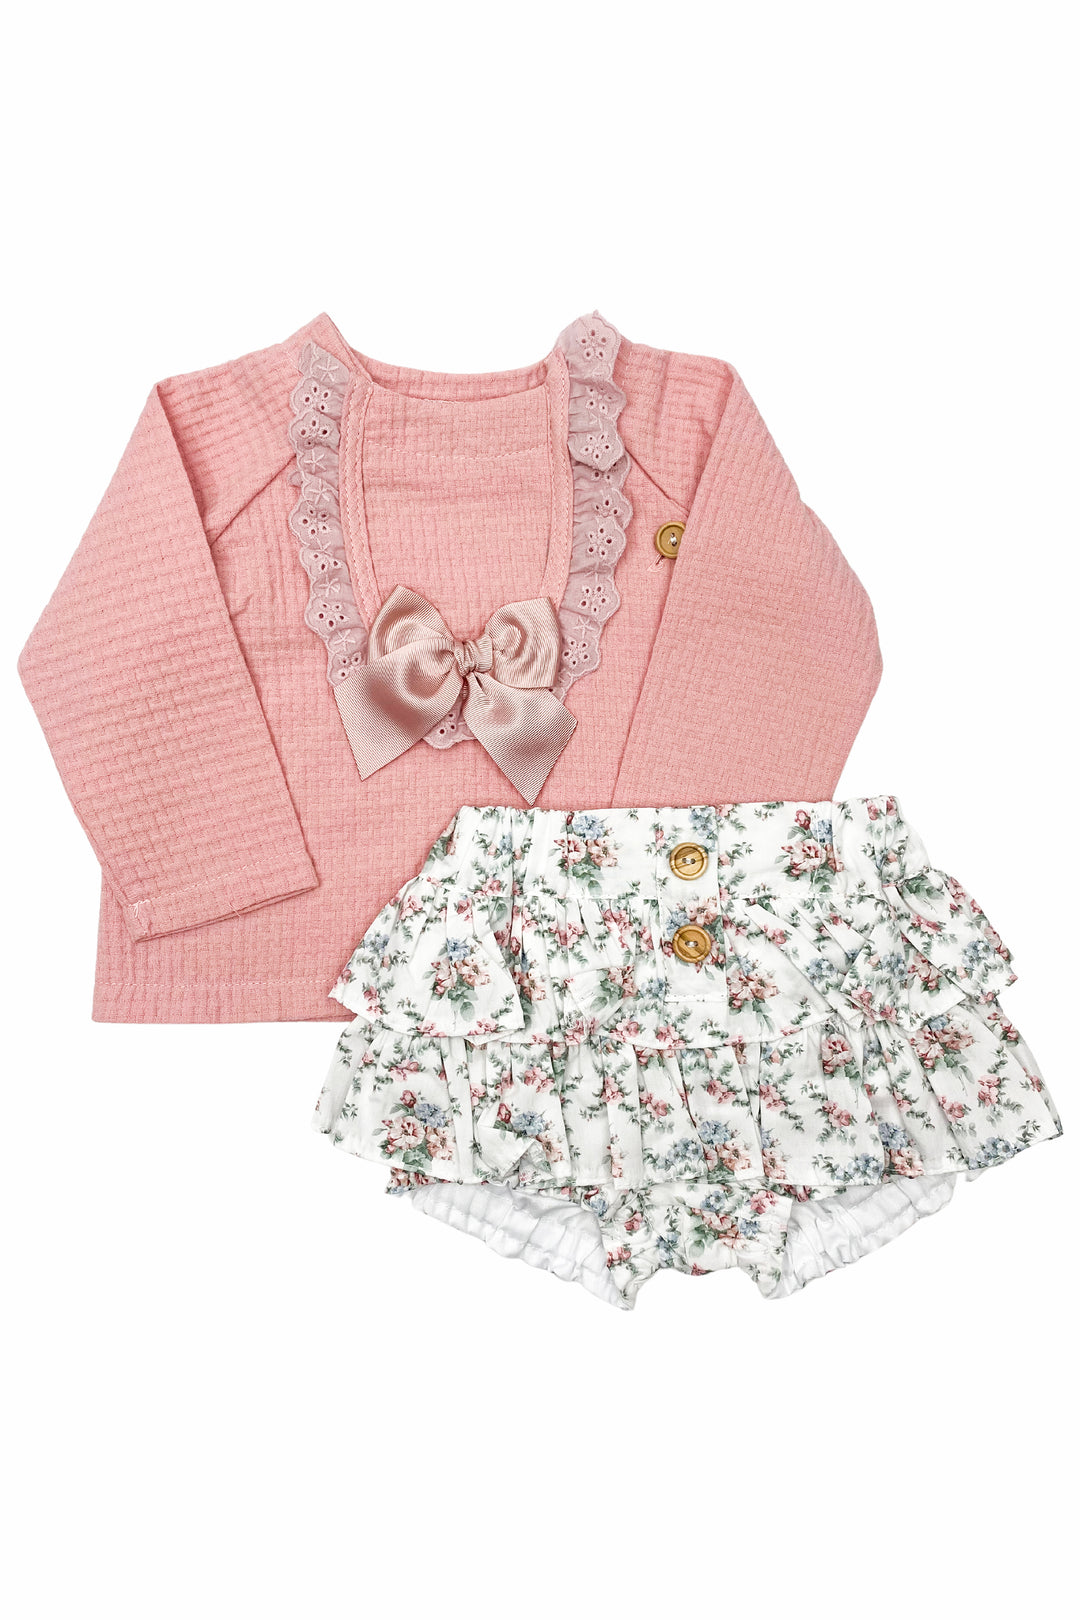 Valentina Bebes "Elena" Dusky Pink Top & Floral Shorts | Millie and John